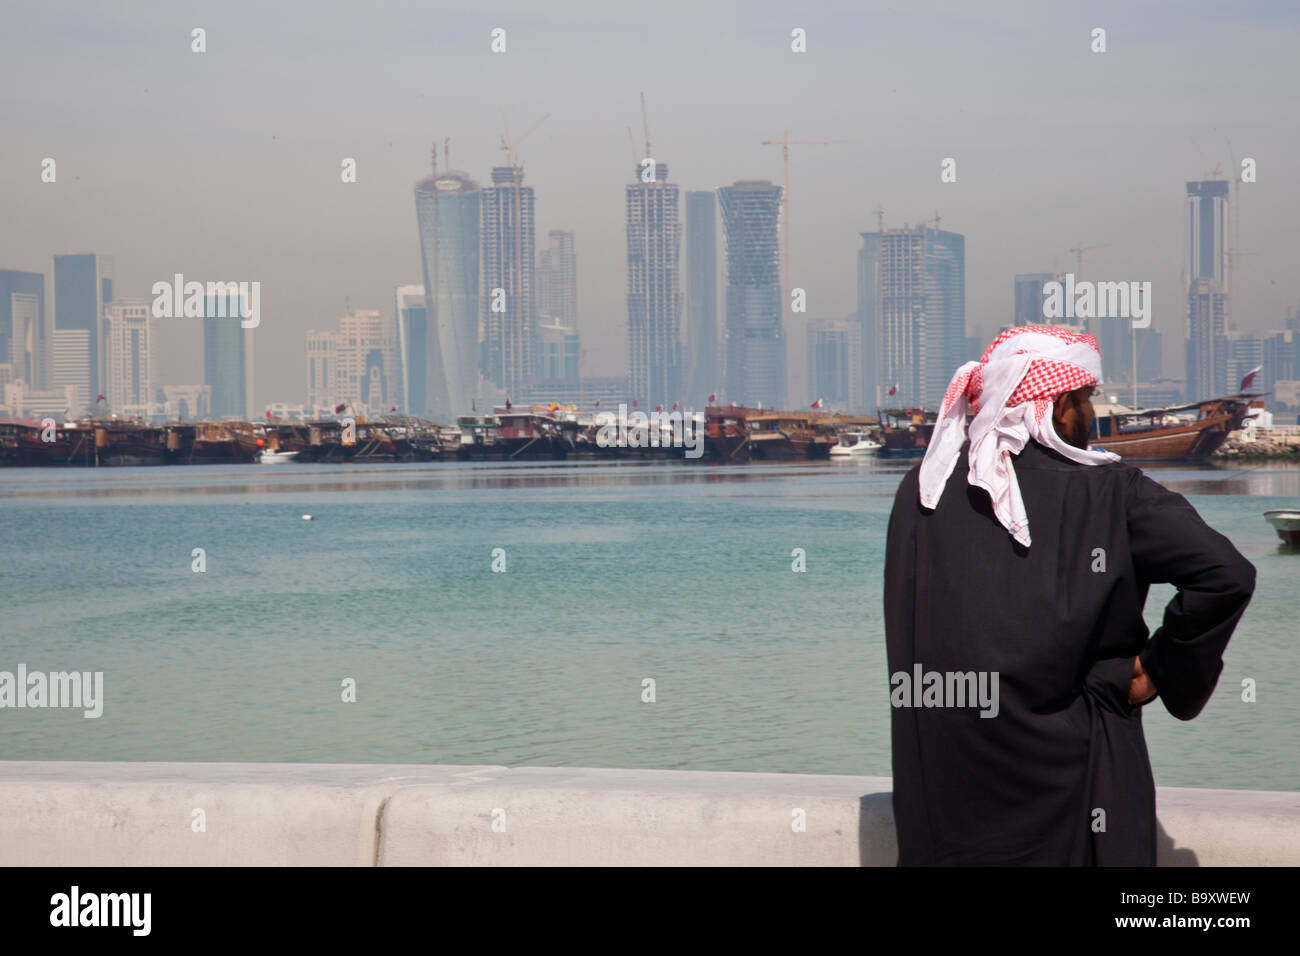 Arab Man and Skyscraper Construction Skyline in Doha Qatar Stock Photo